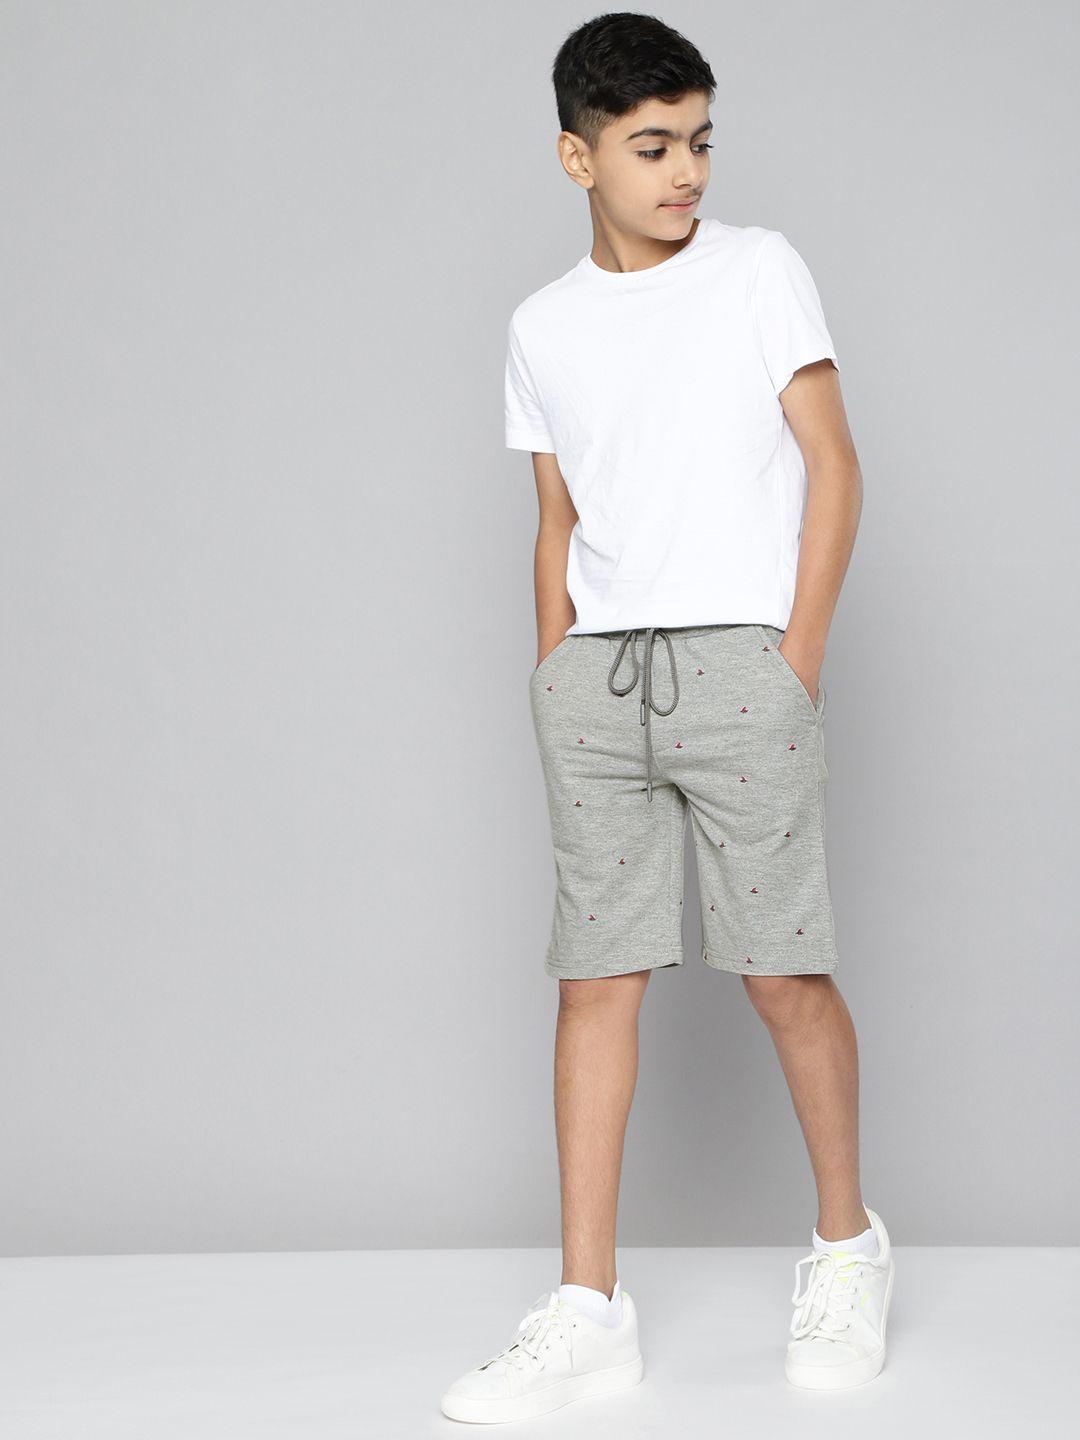 m&h juniors boys grey melange conversational printed shorts